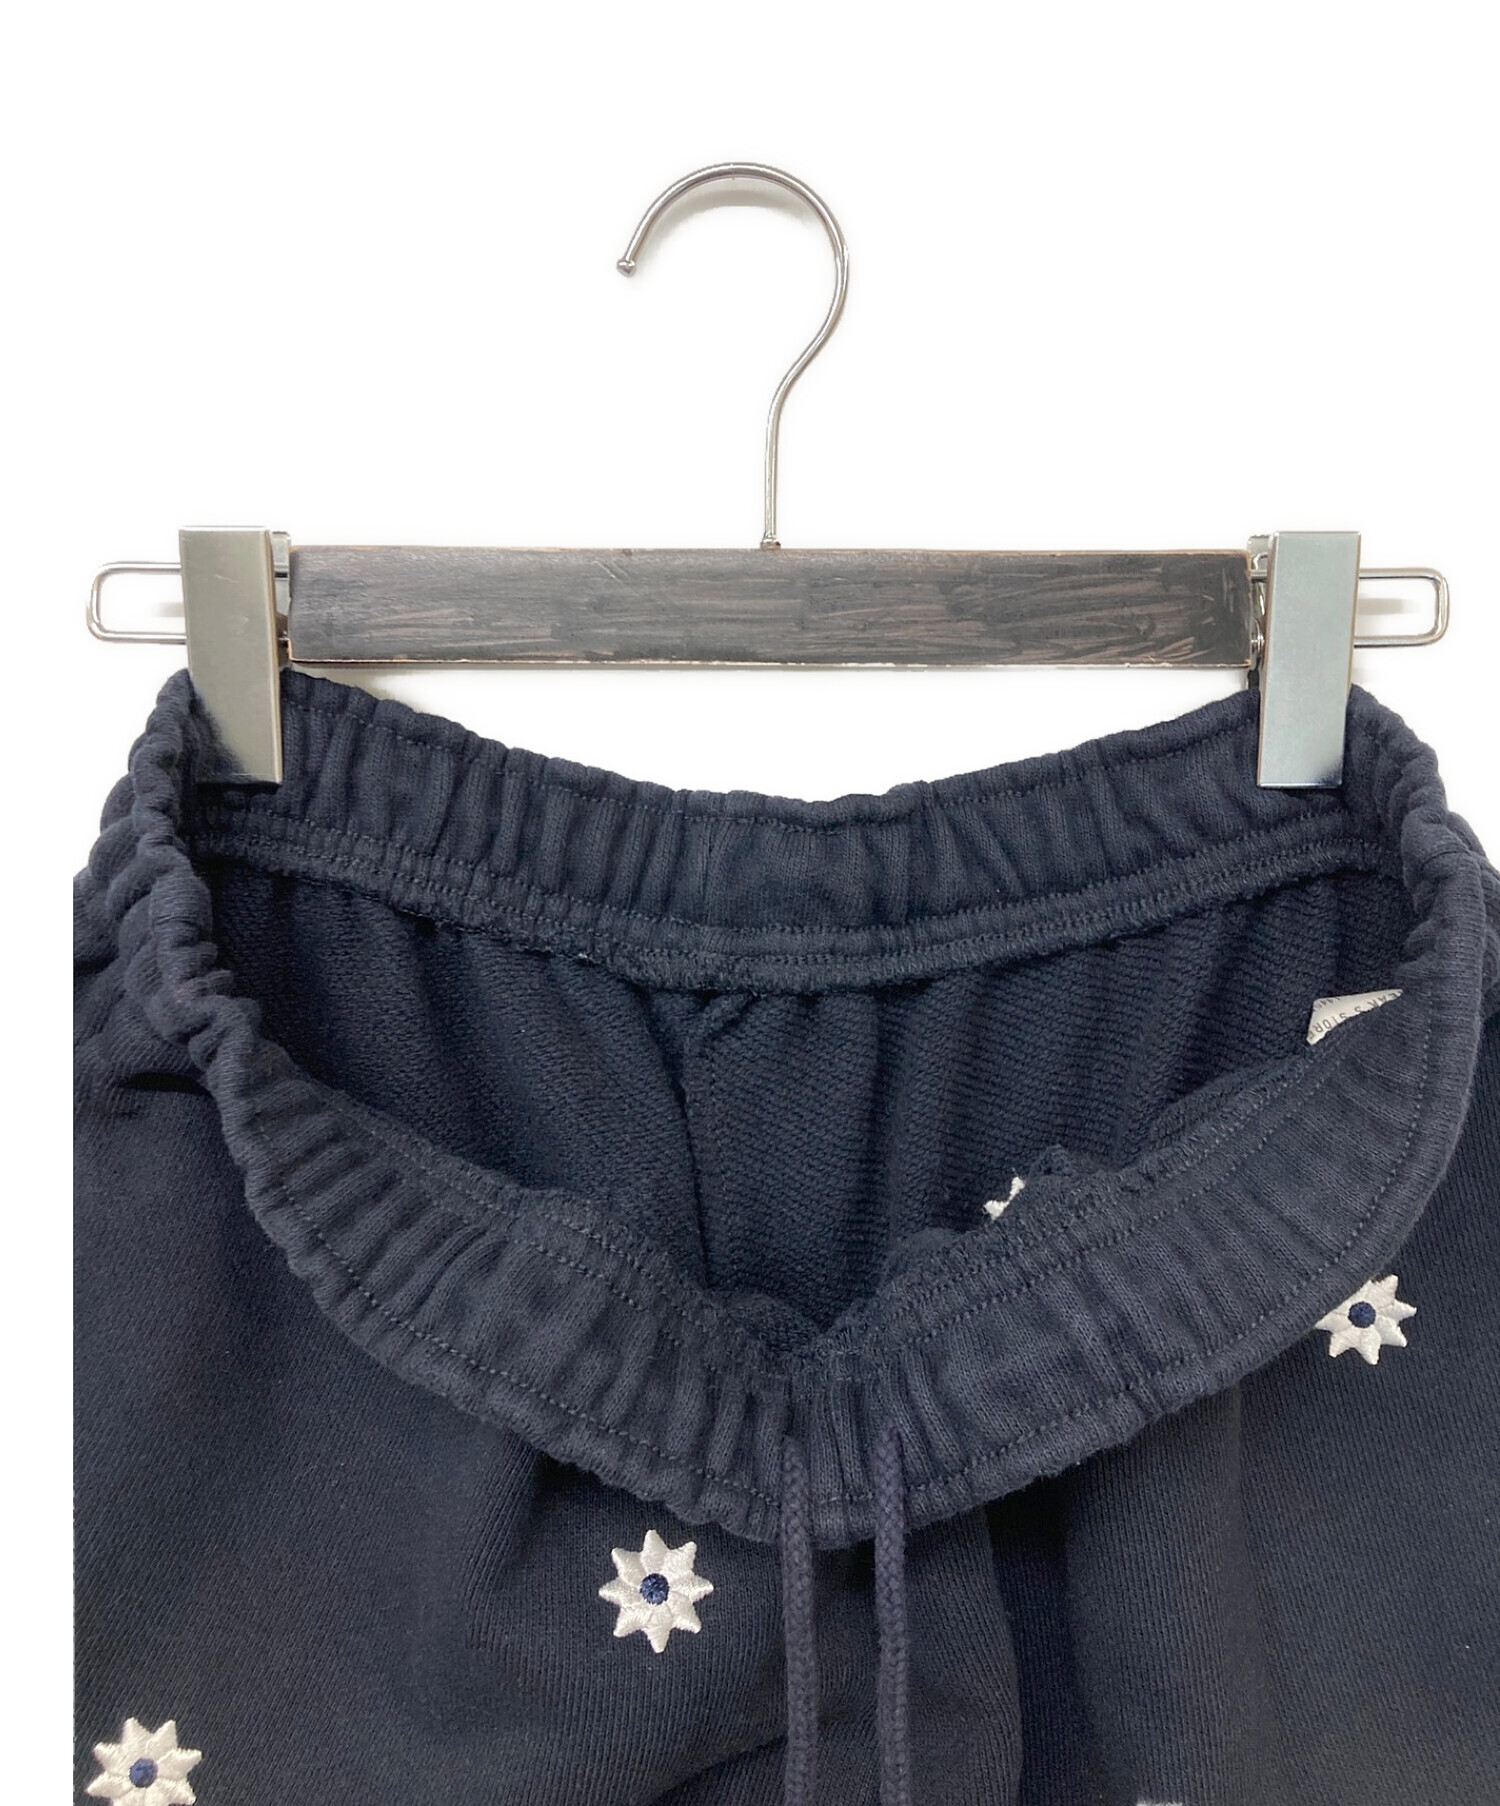 KEBOZ (ケボズ) nick gear (ニックギア) Firsthand (ファーストハンド) Flower&Embroidery Logo  SWEAT PANTS ネイビー サイズ:M